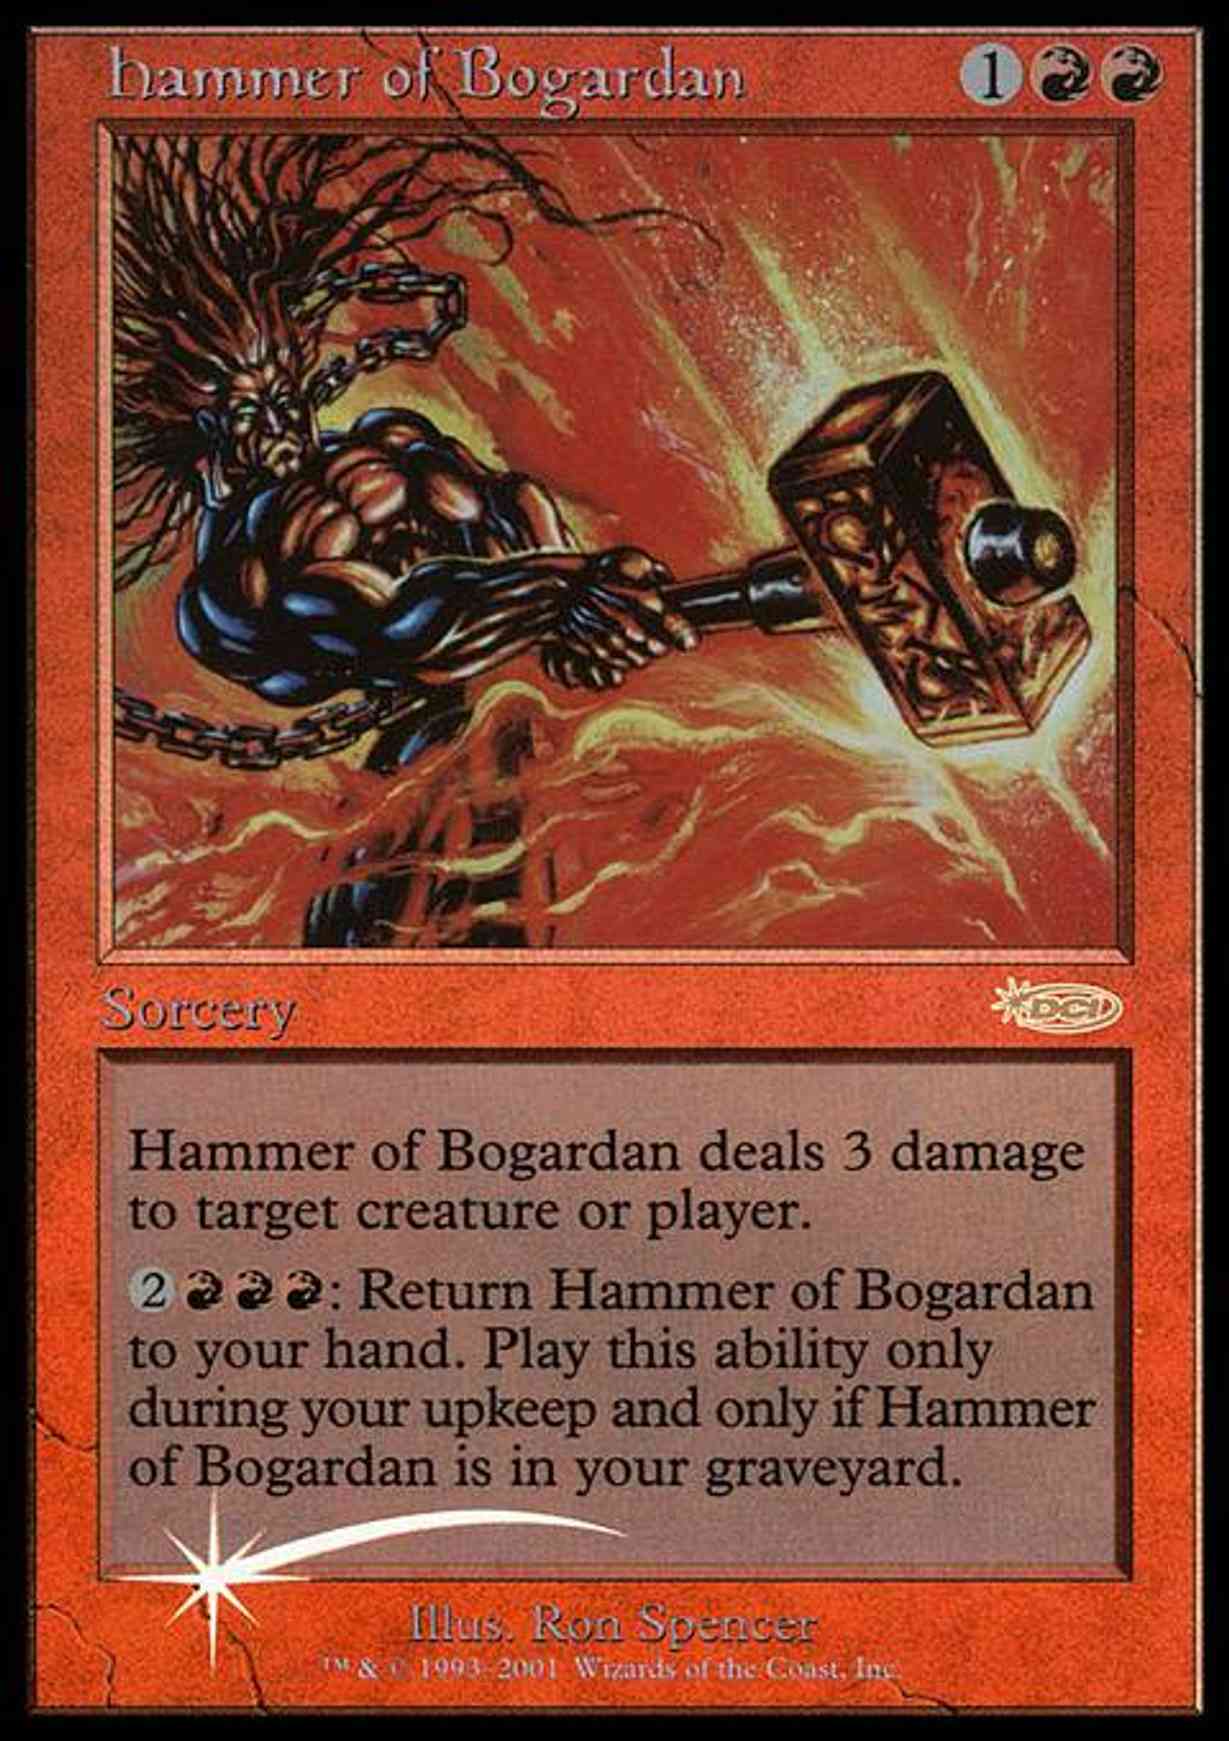 Hammer of Bogardan magic card front